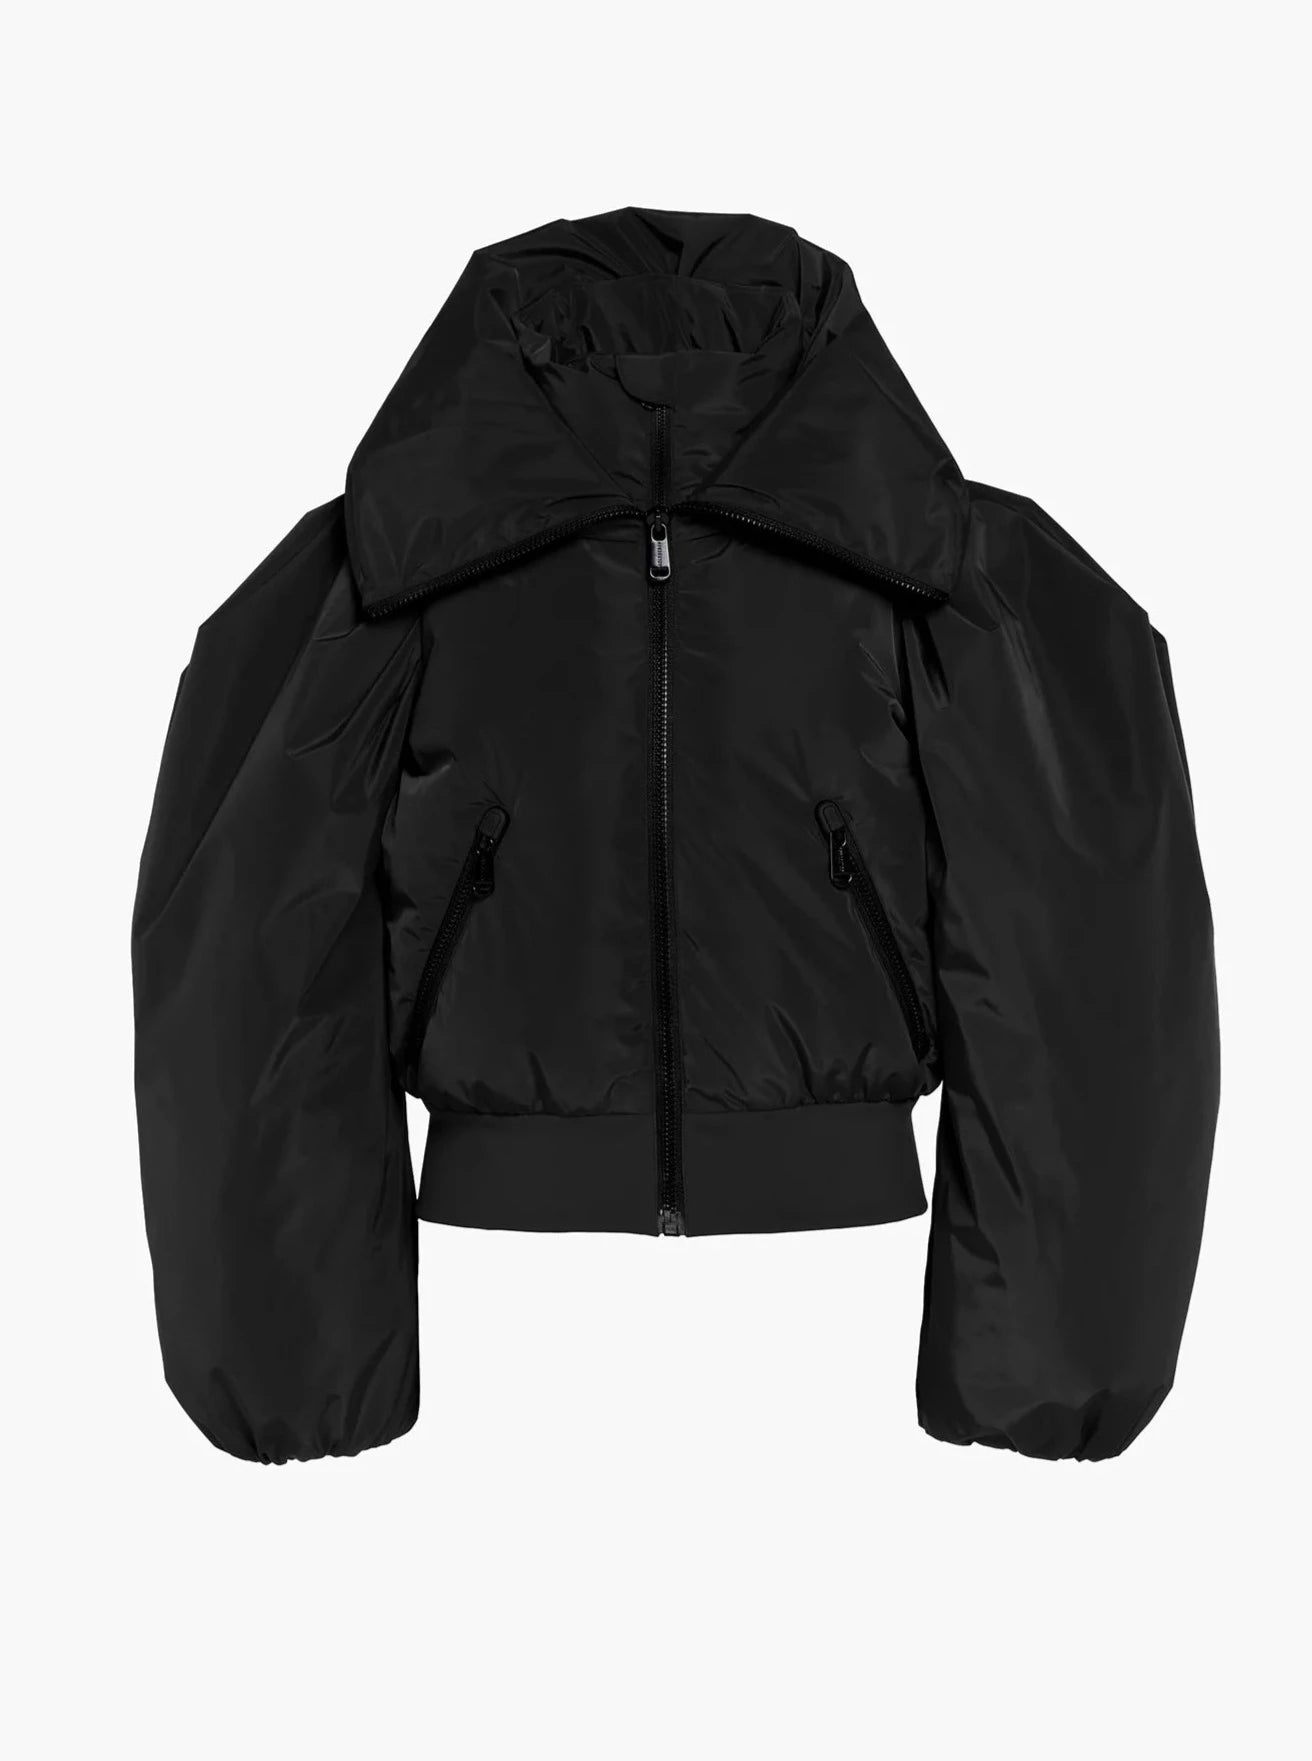 VAVA ski jacket, black